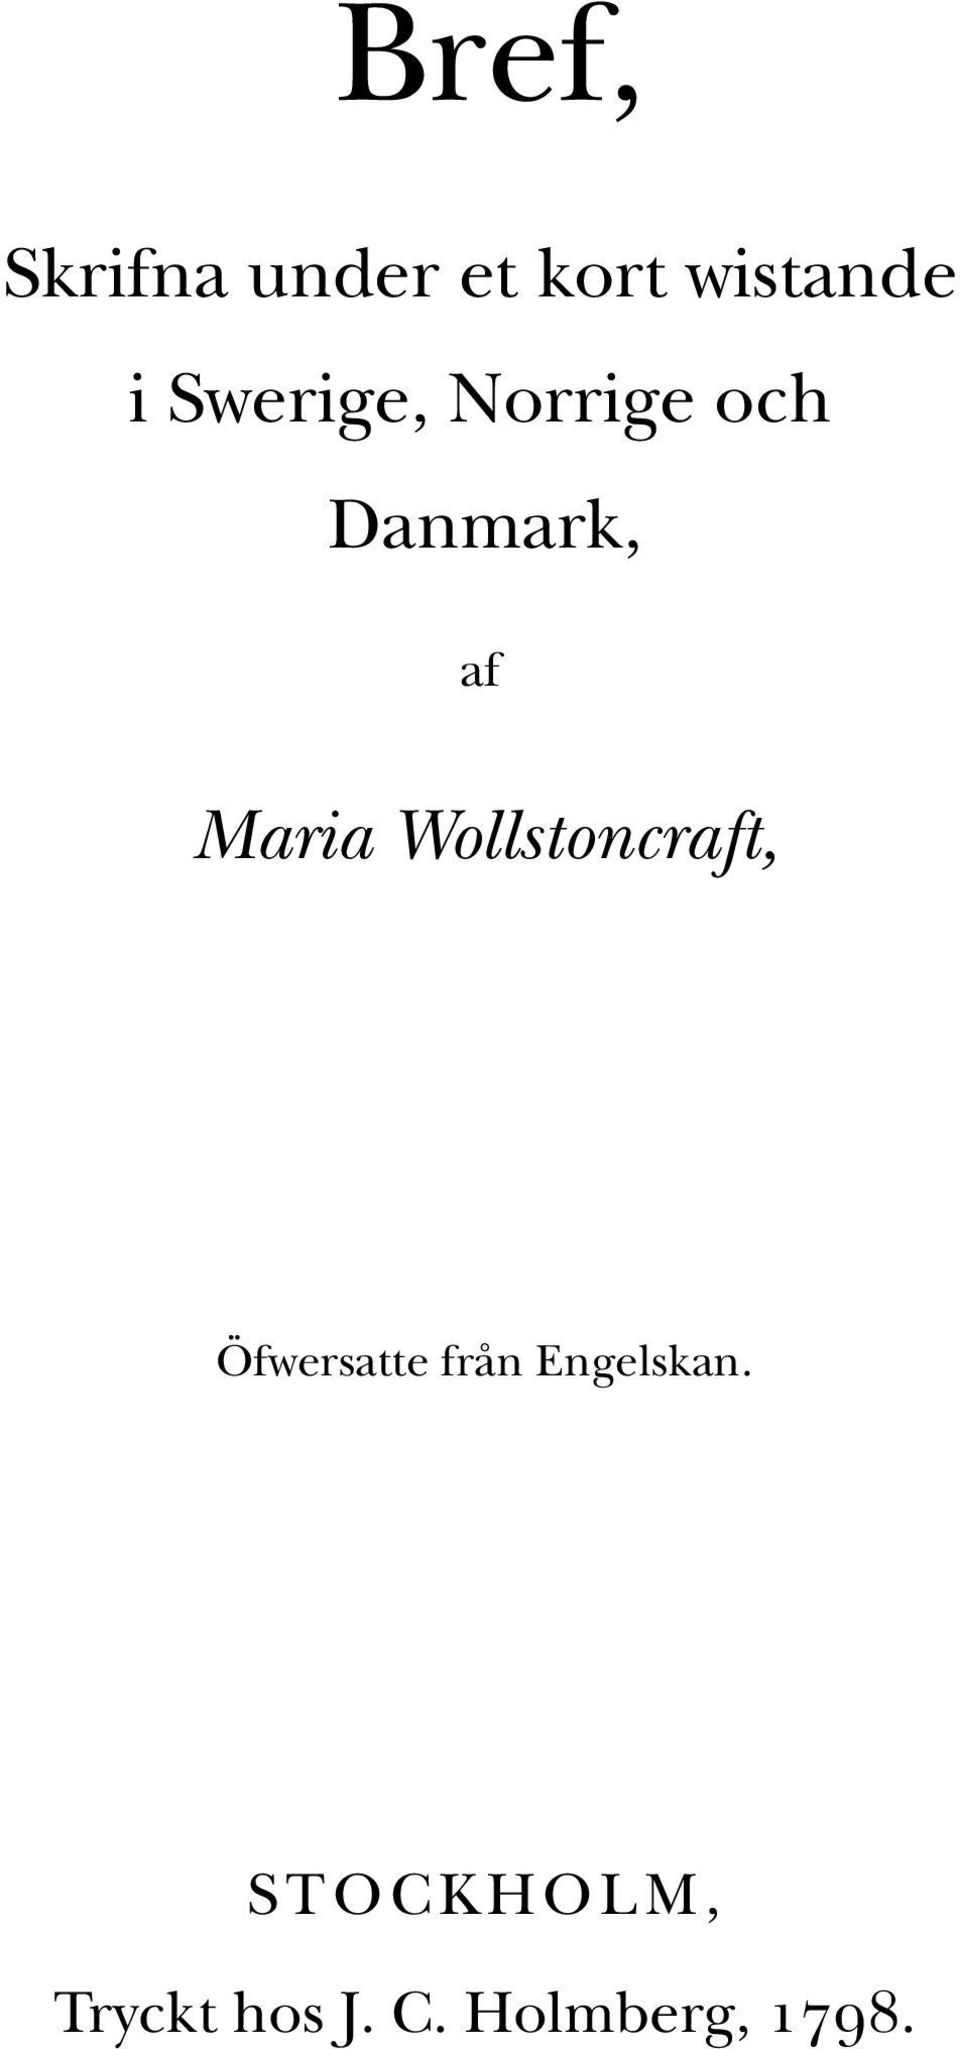 Wollstoncraft, Öfwersatte från Engelskan.